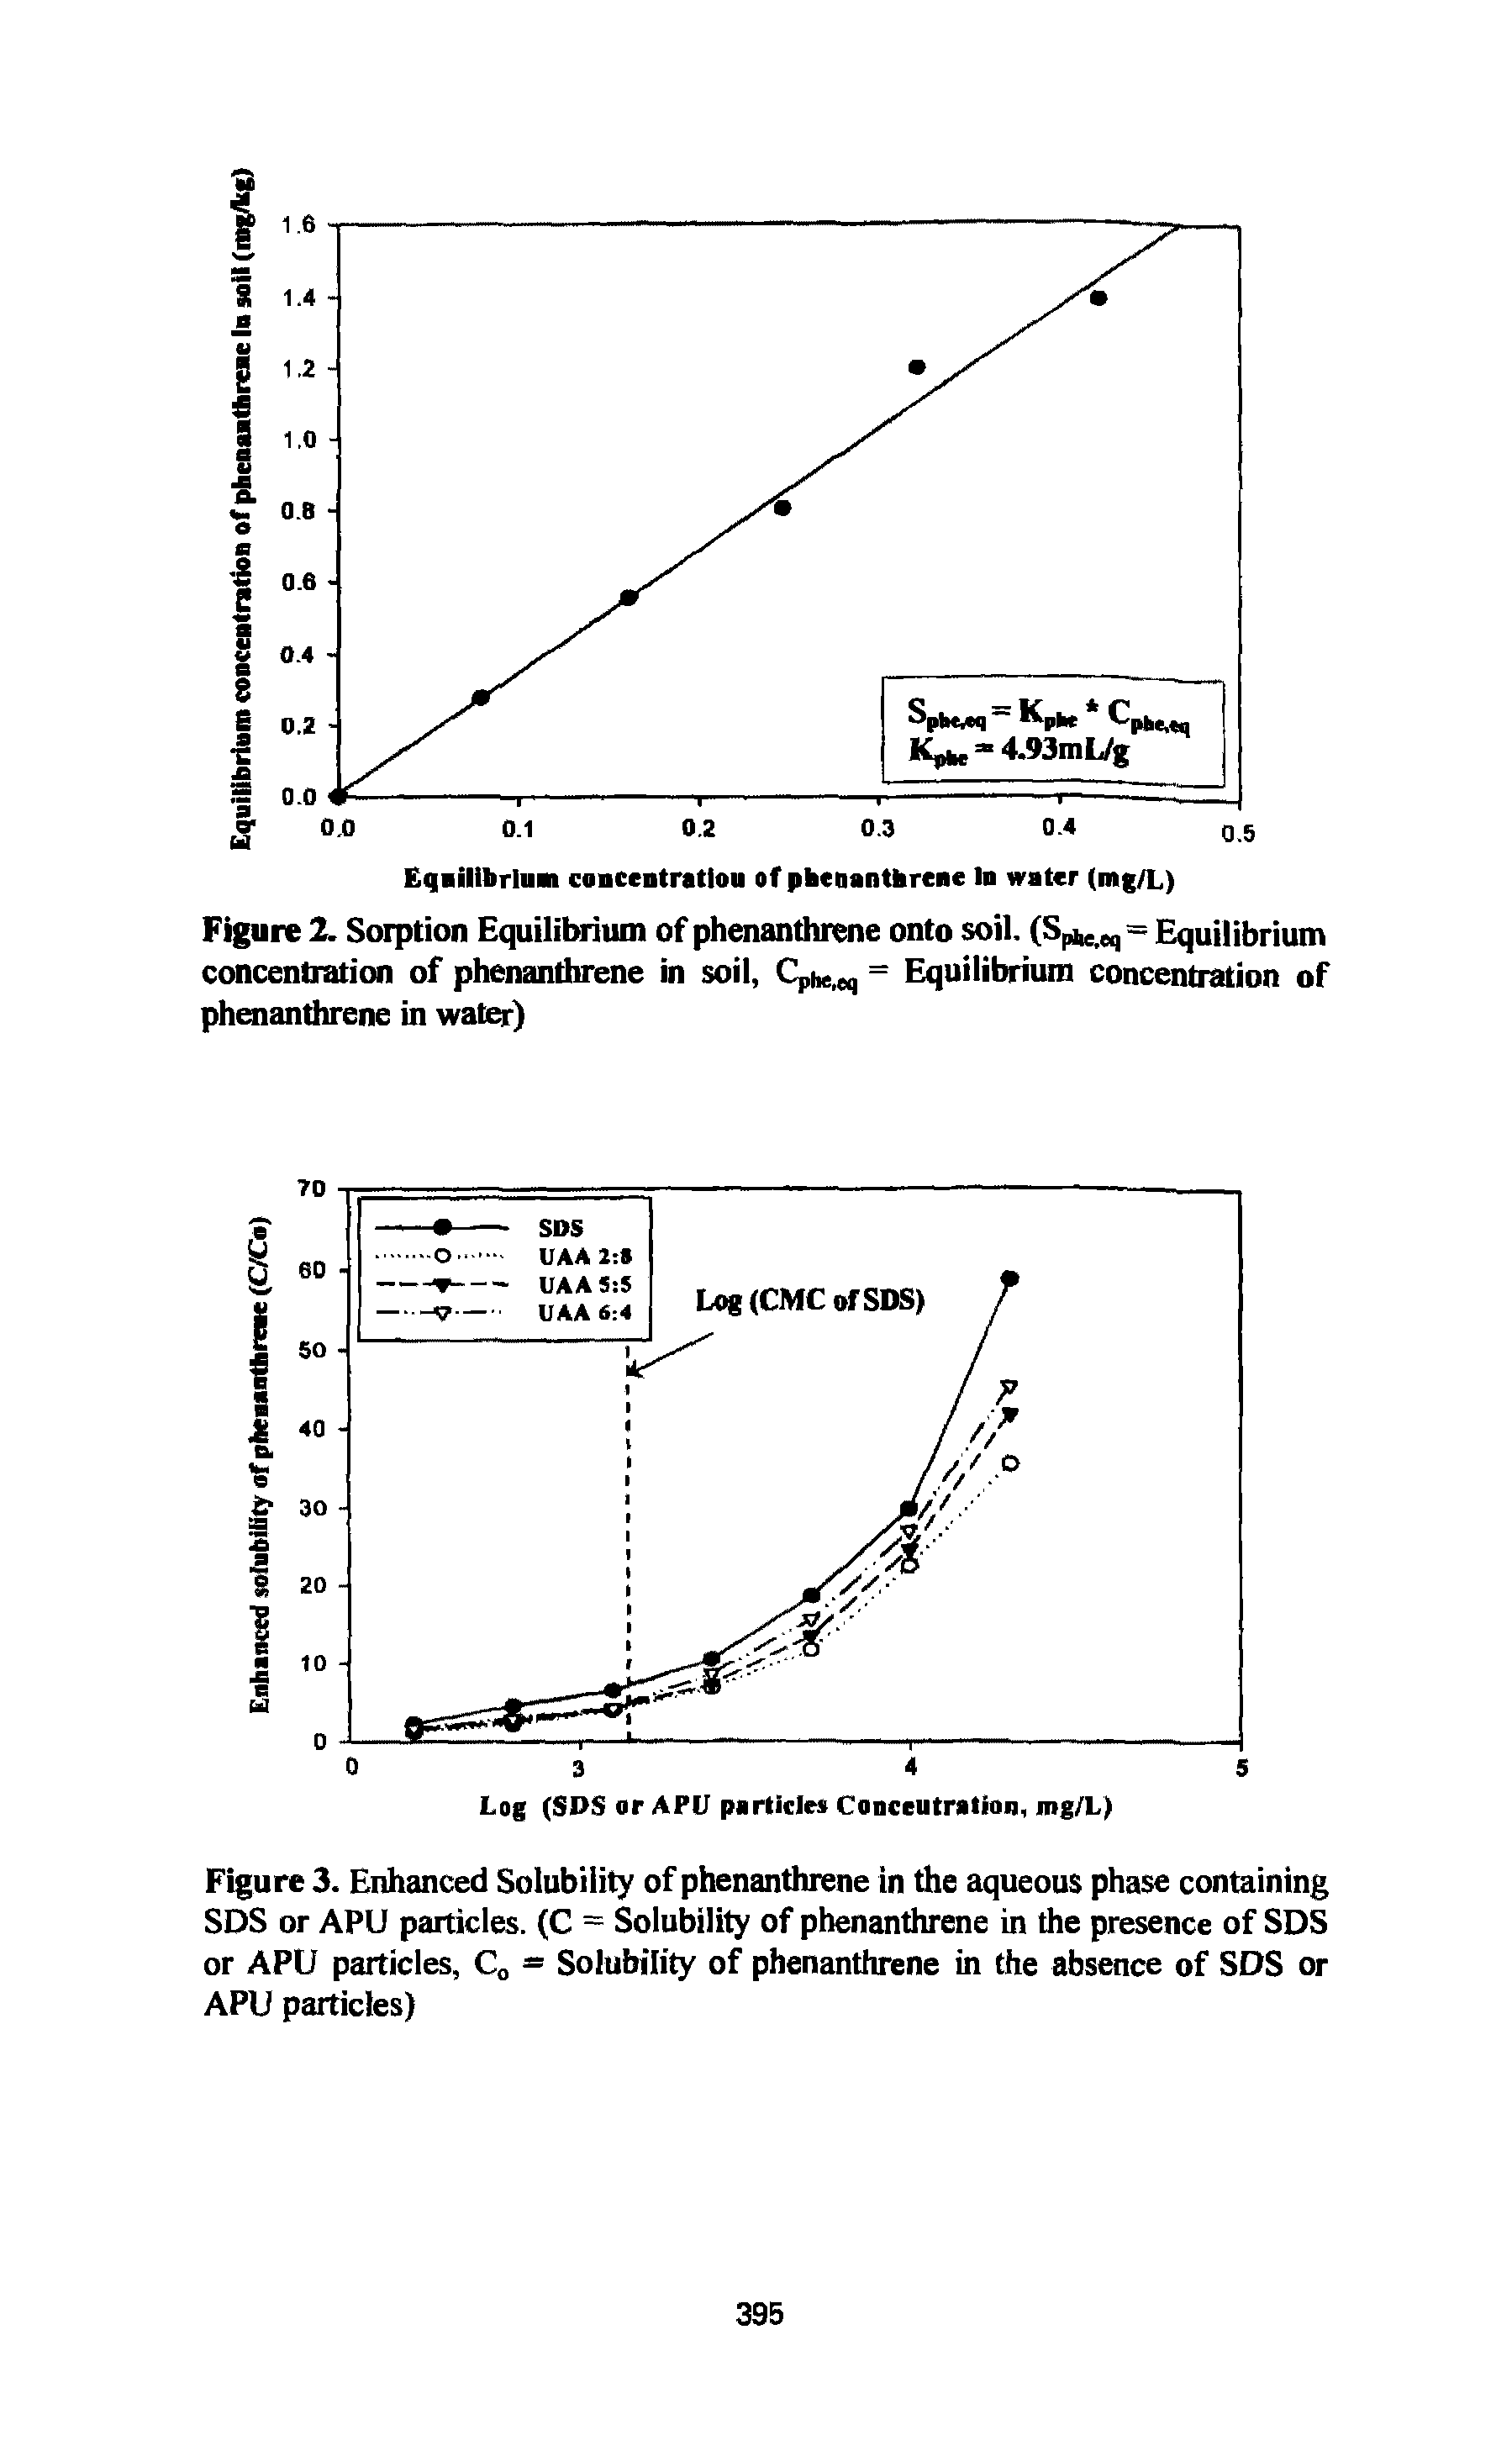 Figure 2. Sorption Equilibrium of phenanthrene onto soil. (SpiK,eq=Equilibrium concentration of phenanthrene in soil, Cphe,eq = Equilibrium concentration of phenanthrene in water)...